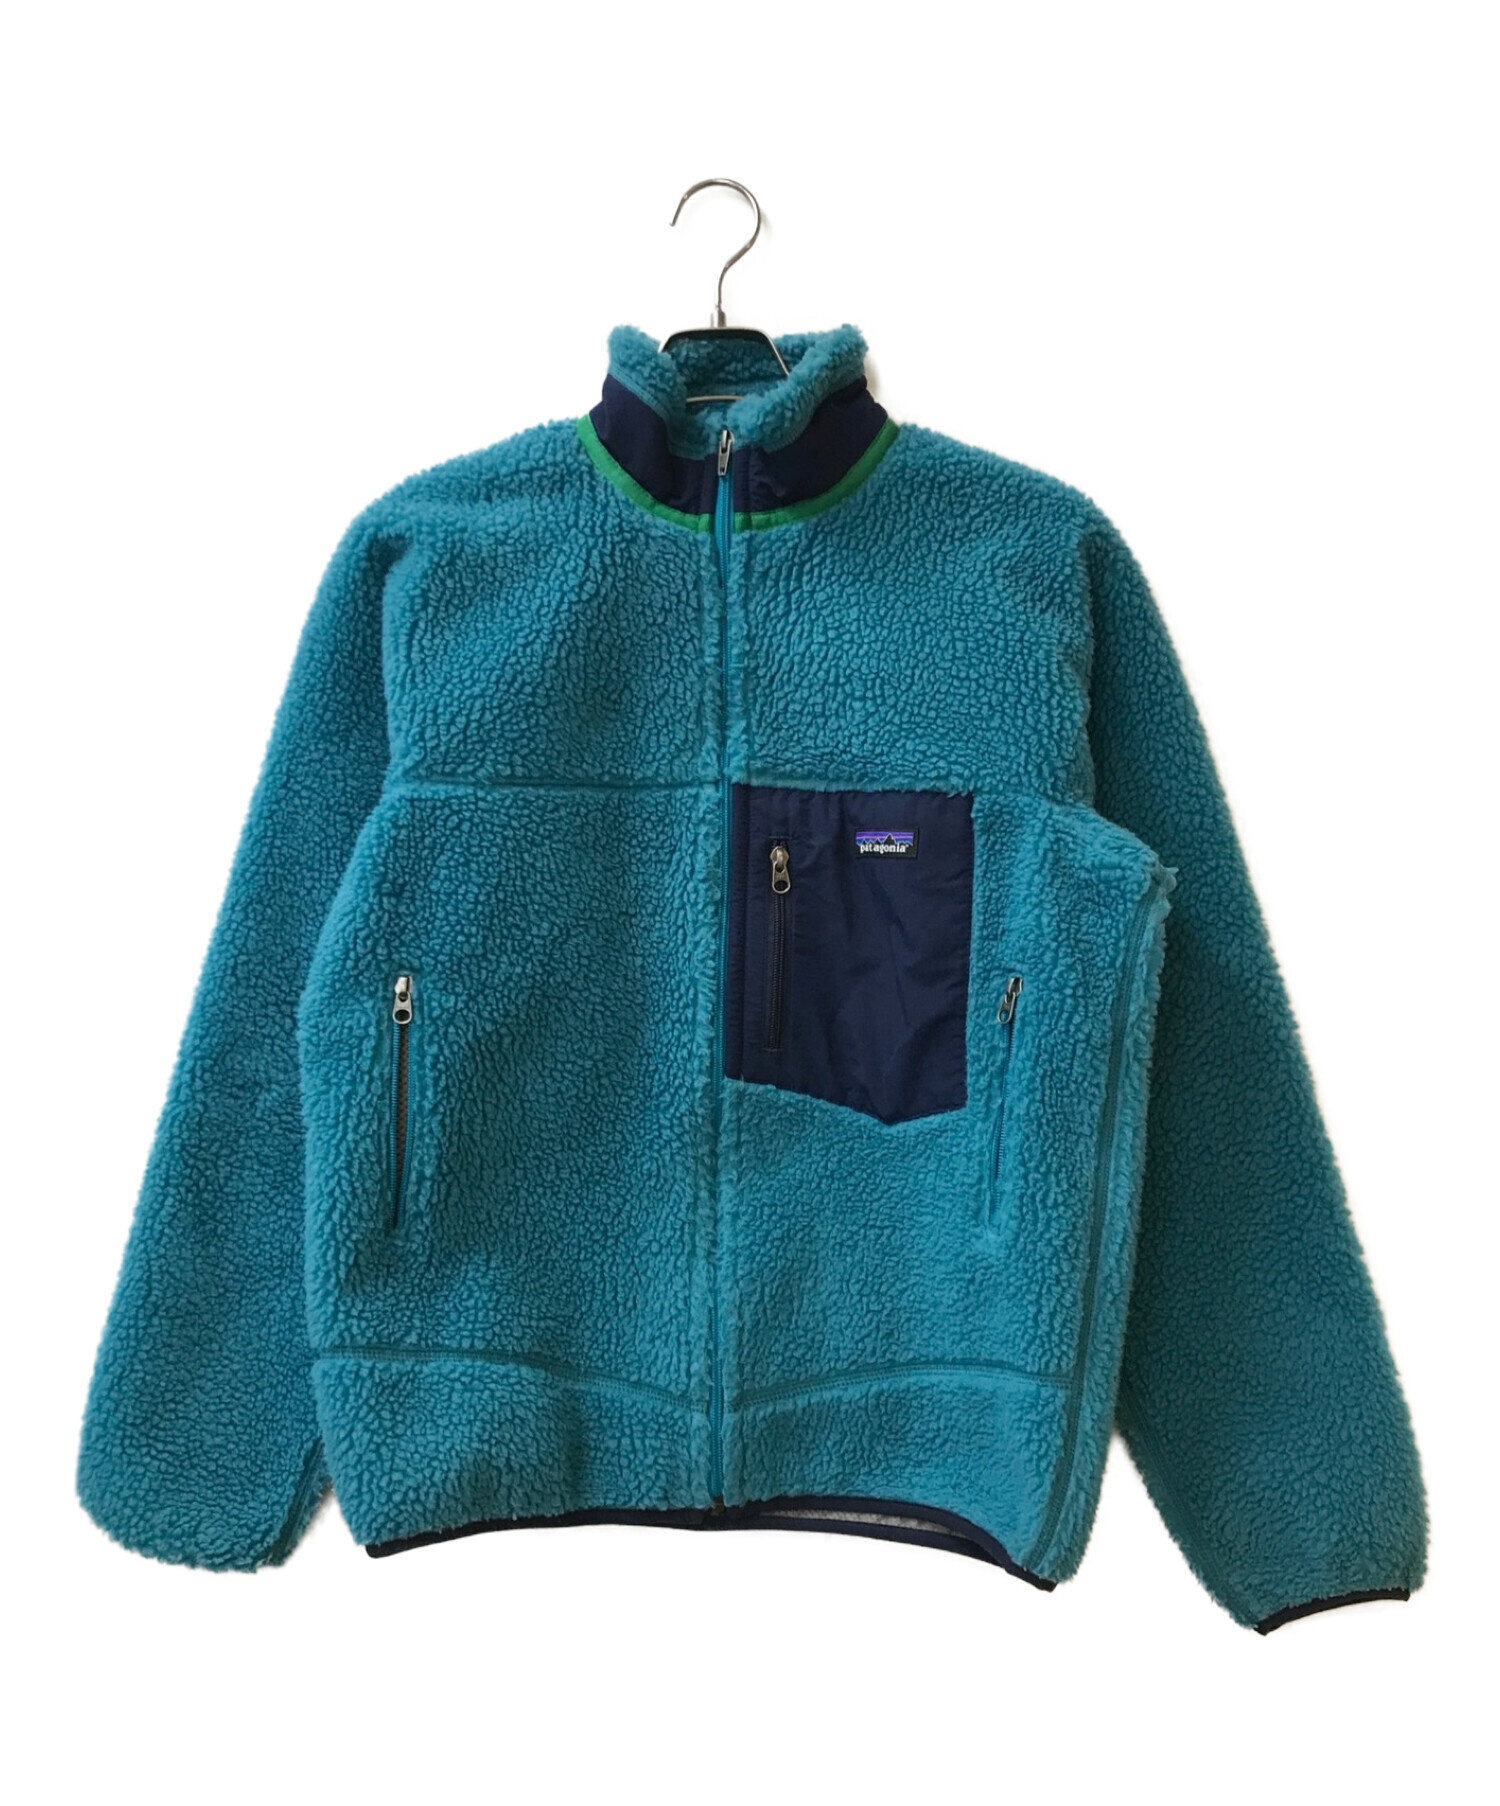 Patagonia (パタゴニア) RETRO-X Jacket ブルー サイズ:Ｓ